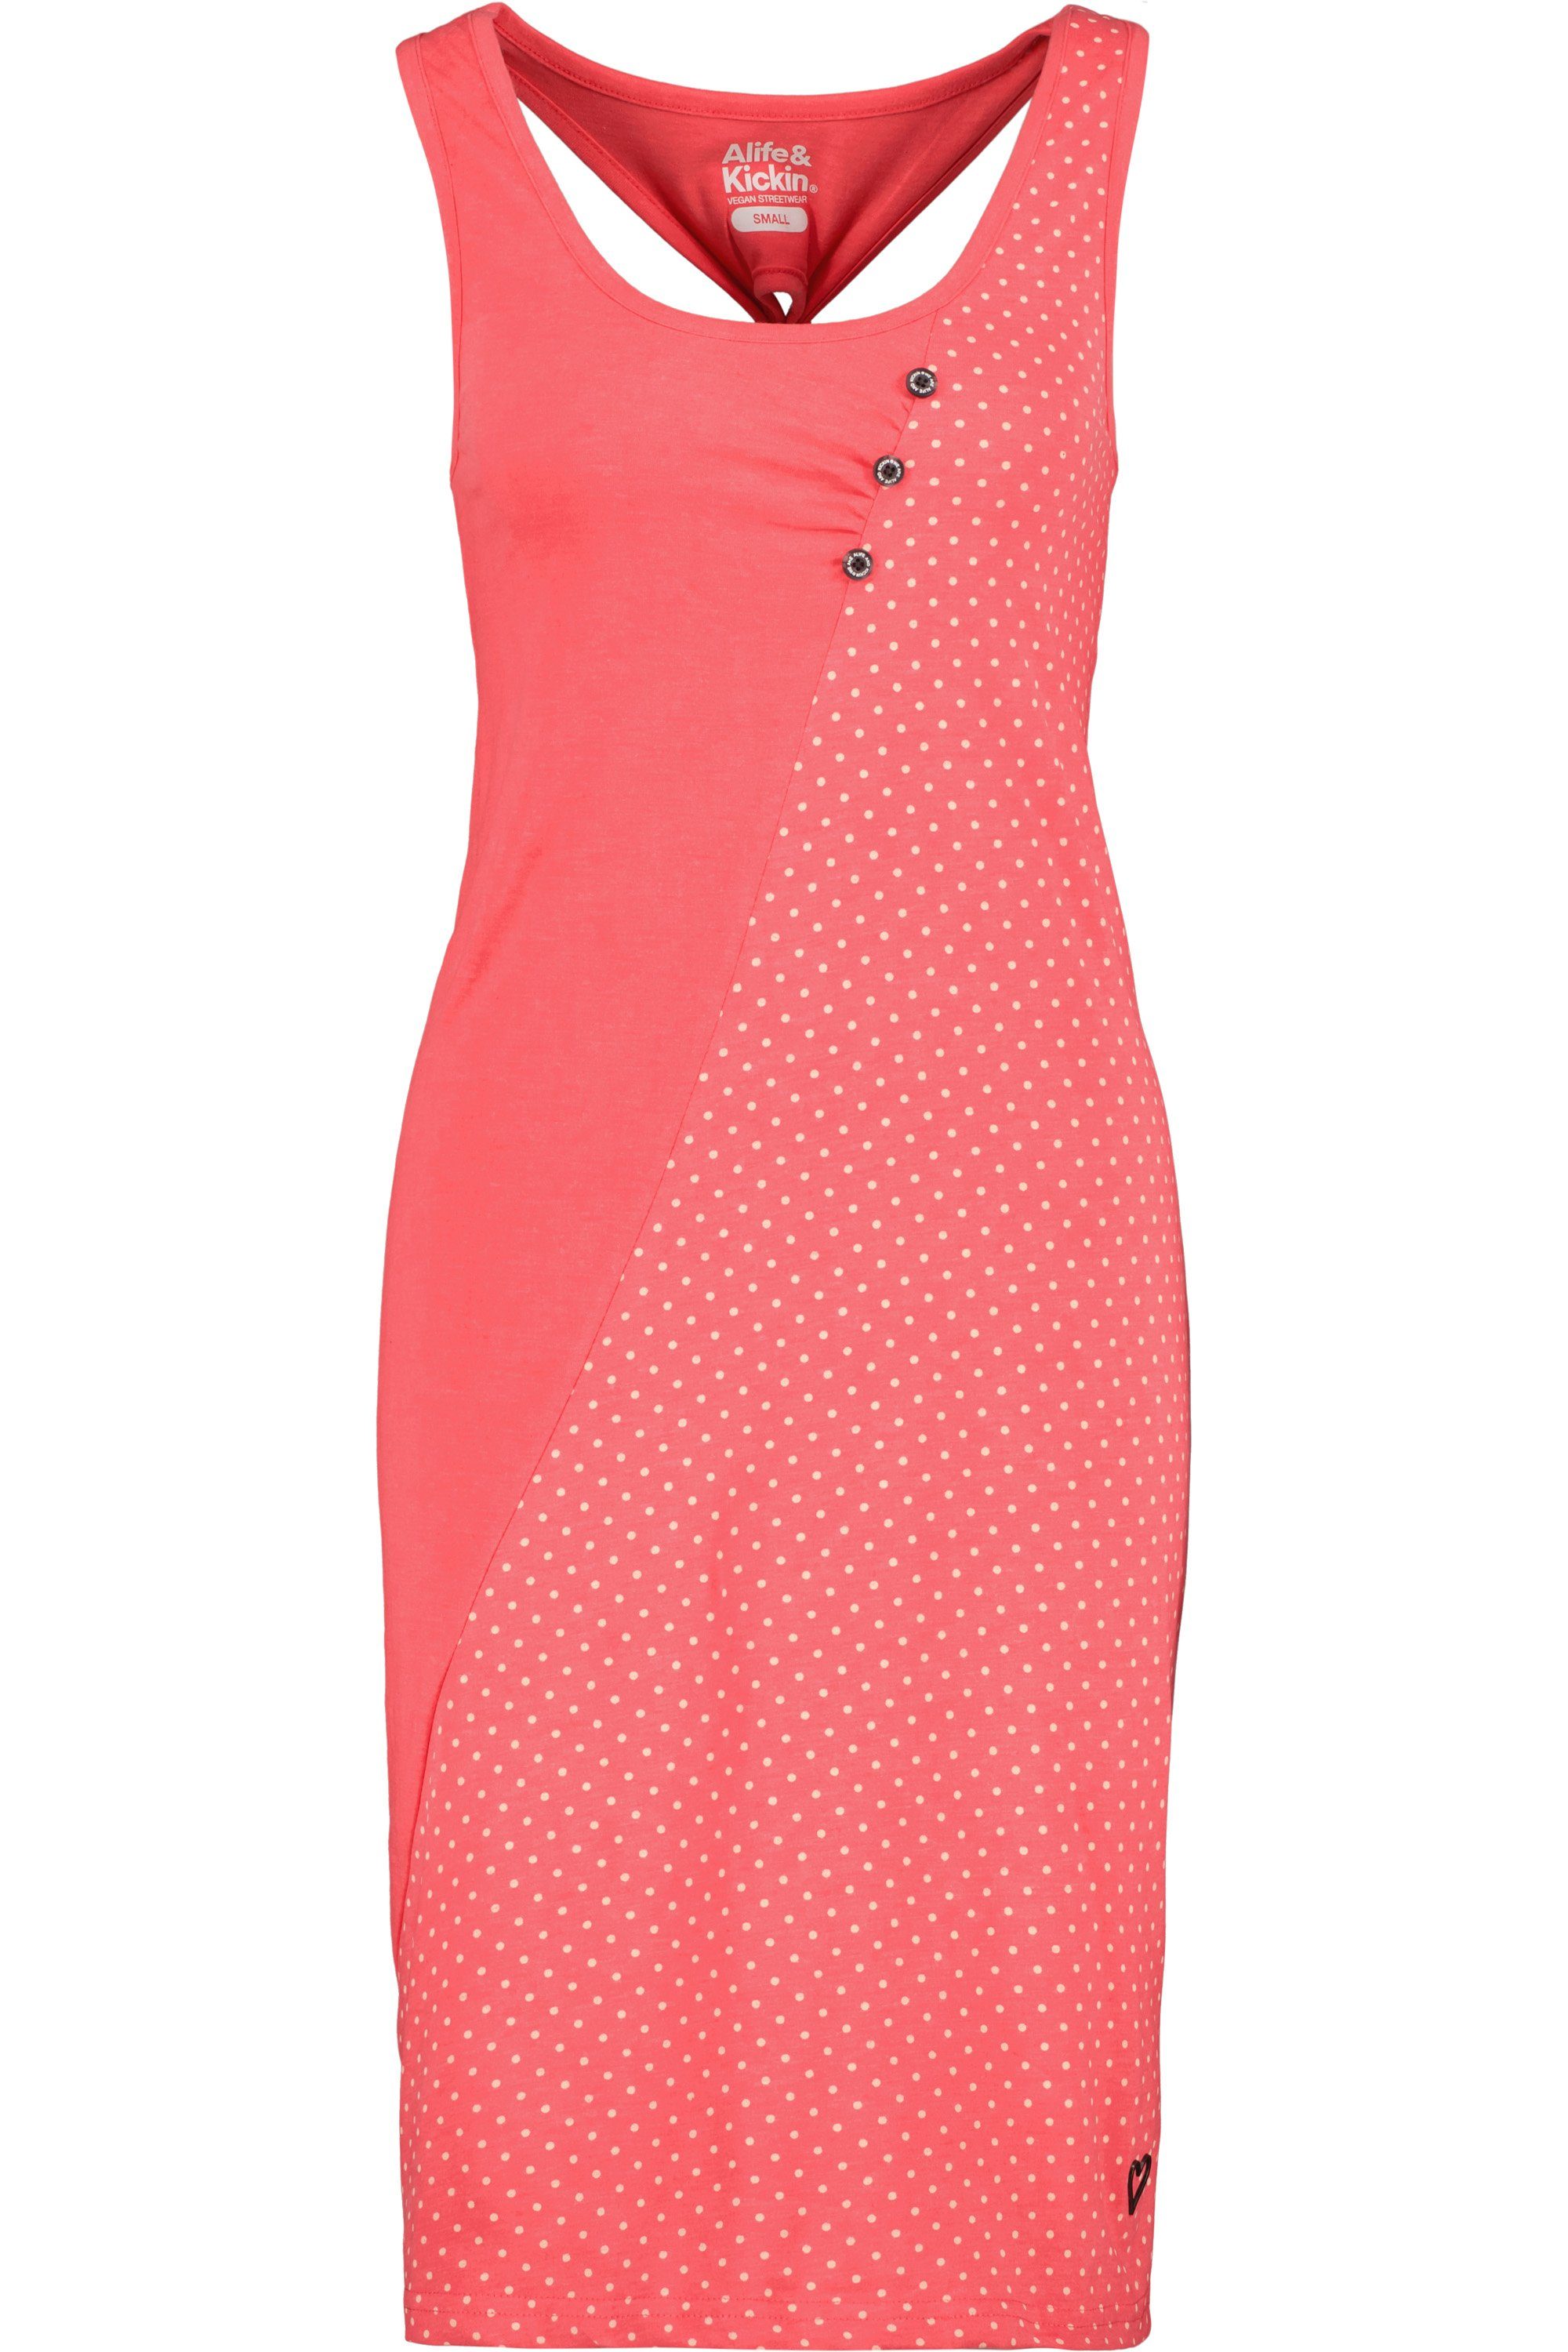 Alife & Kickin Sommerkleid coral Sommerkleid, Sleeveless Kleid melange CameronAK B Damen Dress